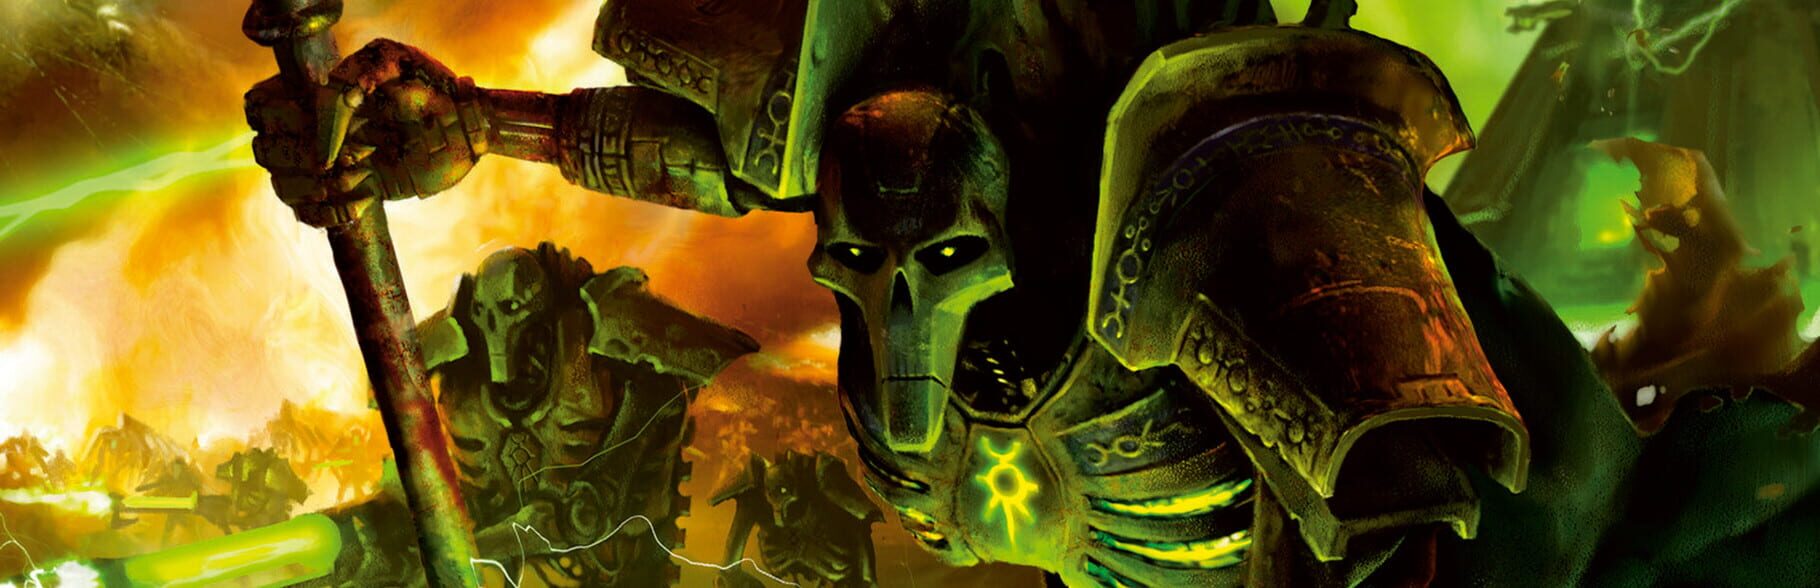 Arte - Warhammer 40,000: Dawn of War - Dark Crusade